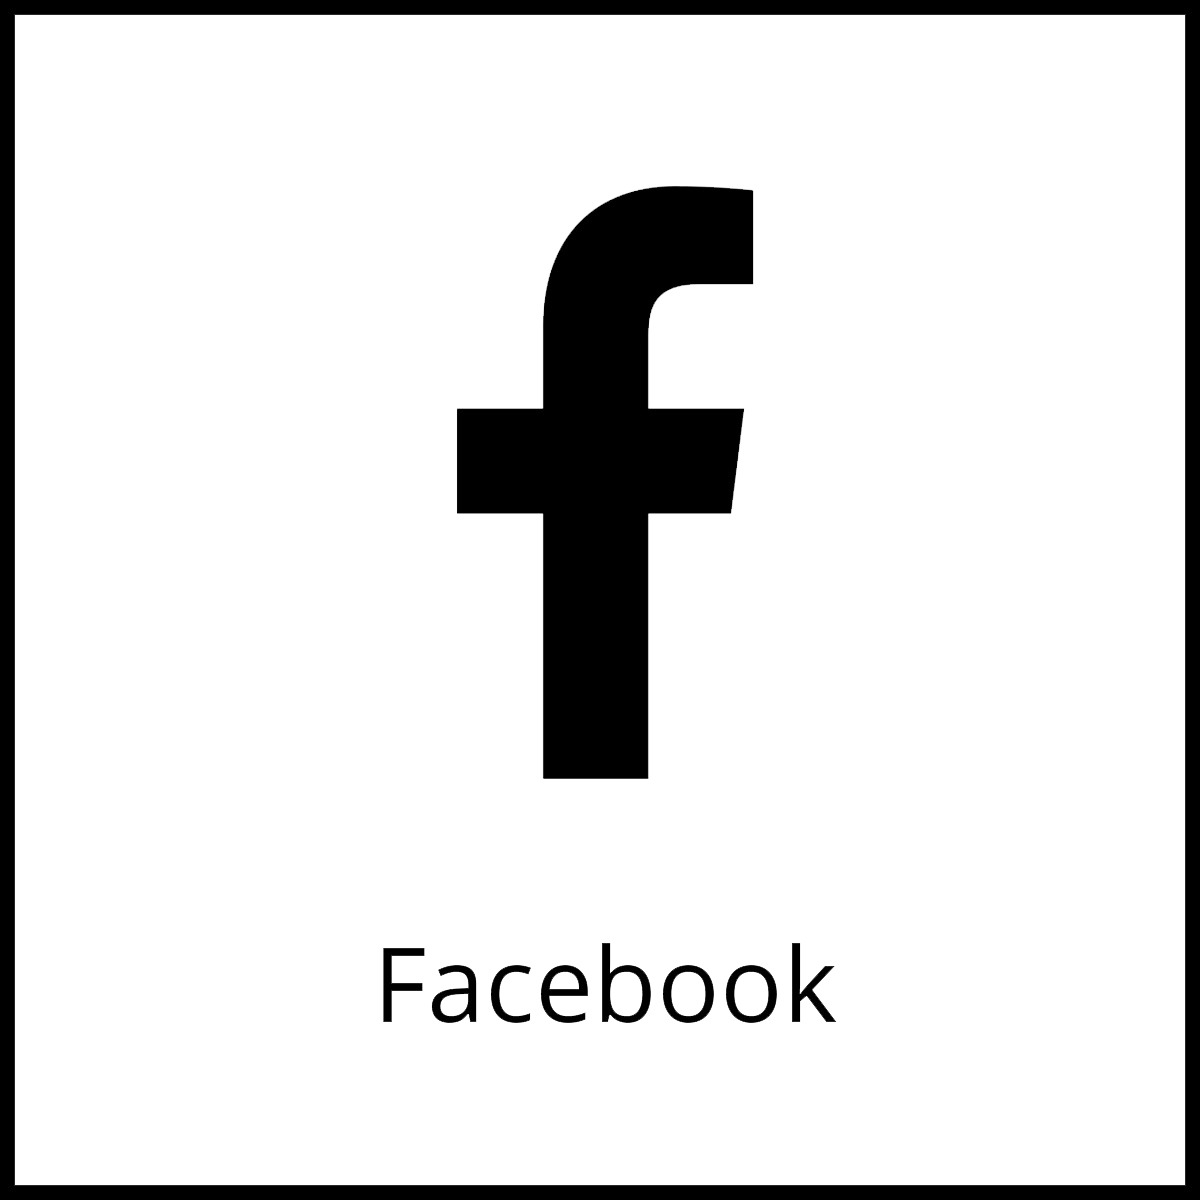 FB social